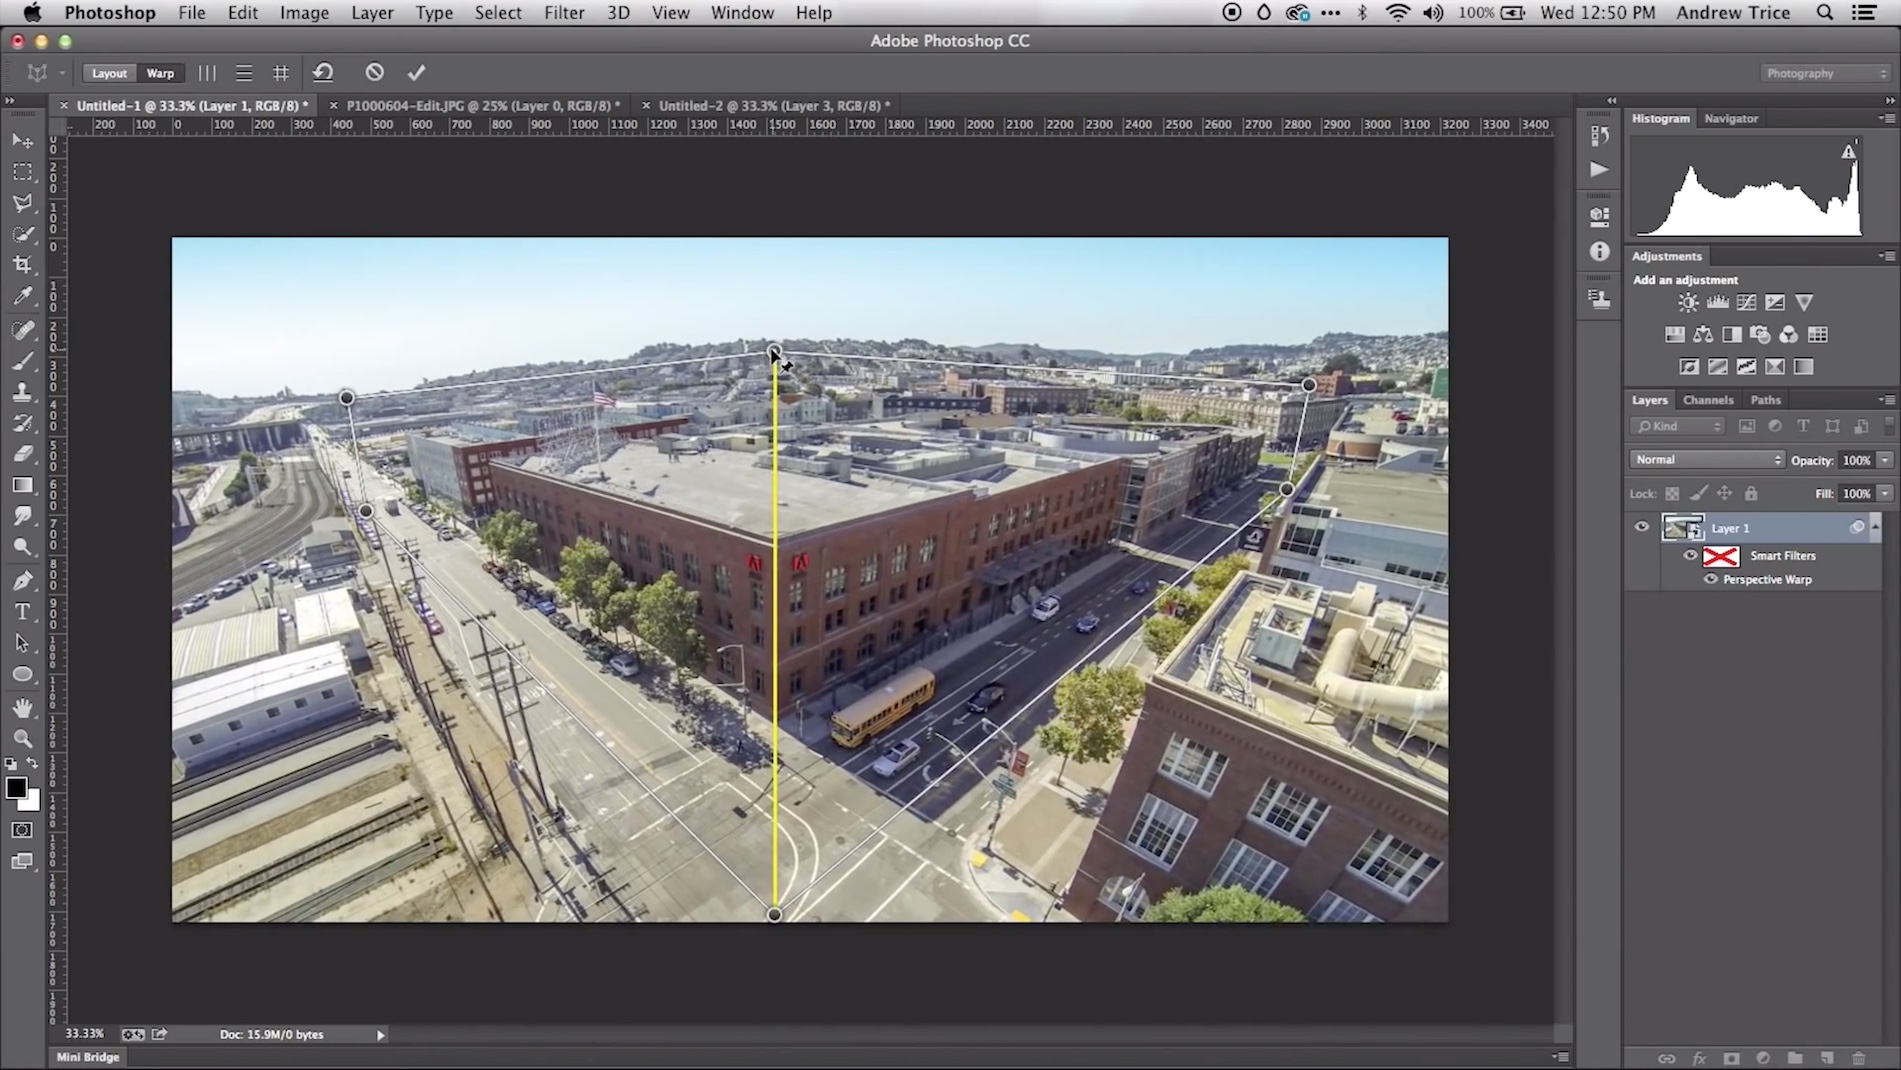 Adobe Photoshop CC 2013 for Mac Perspective Warp (2013)